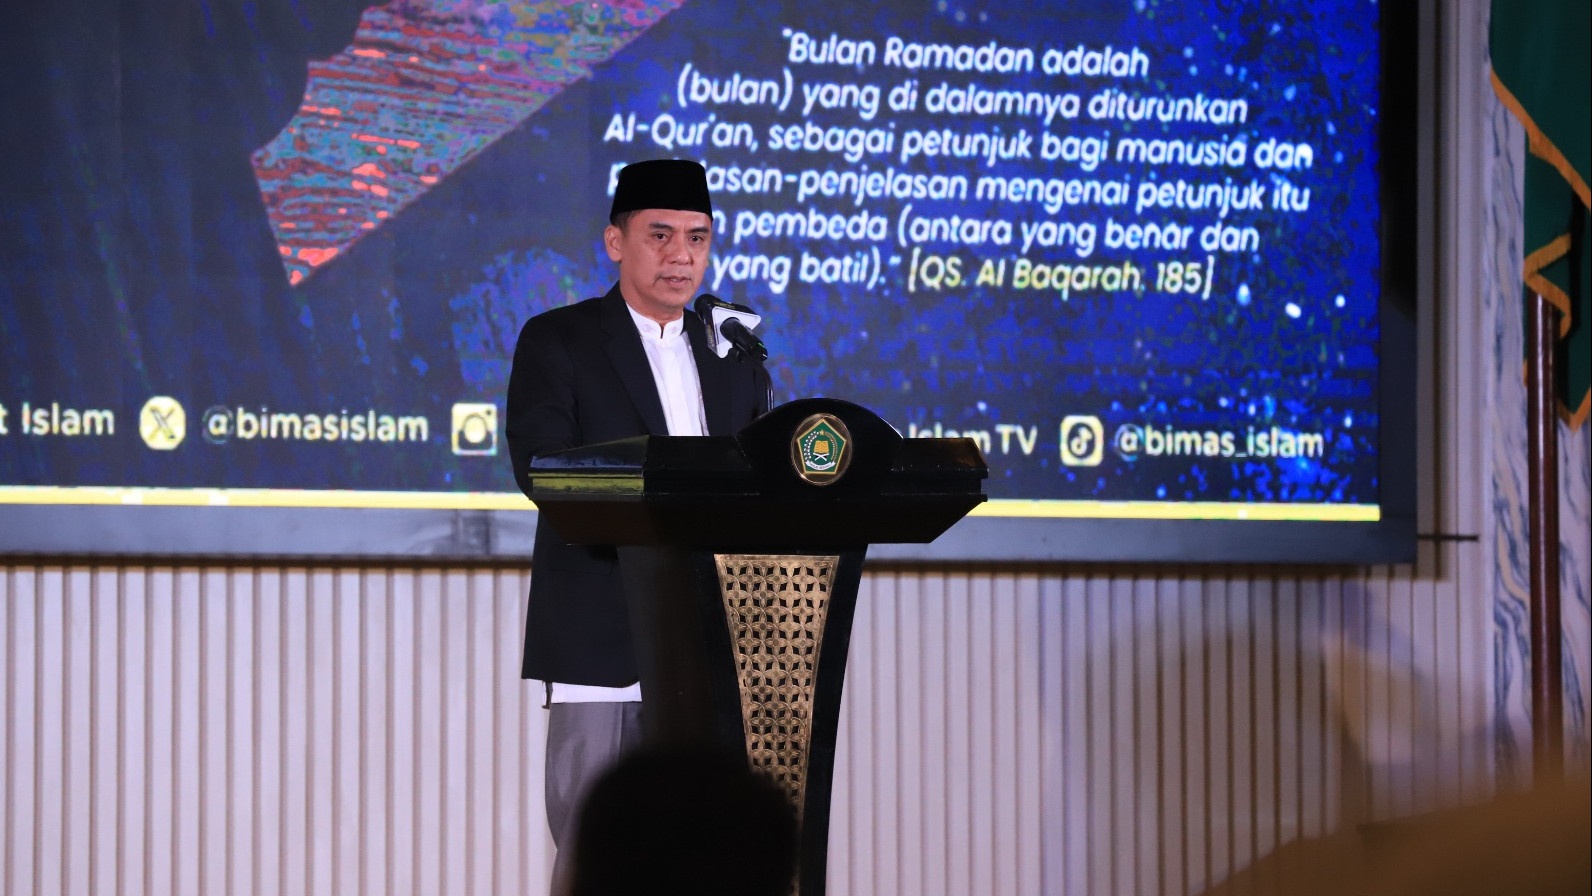 Spirit Al-Quran Bawa Indonesia Rawat Harmoni dalam Keragaman